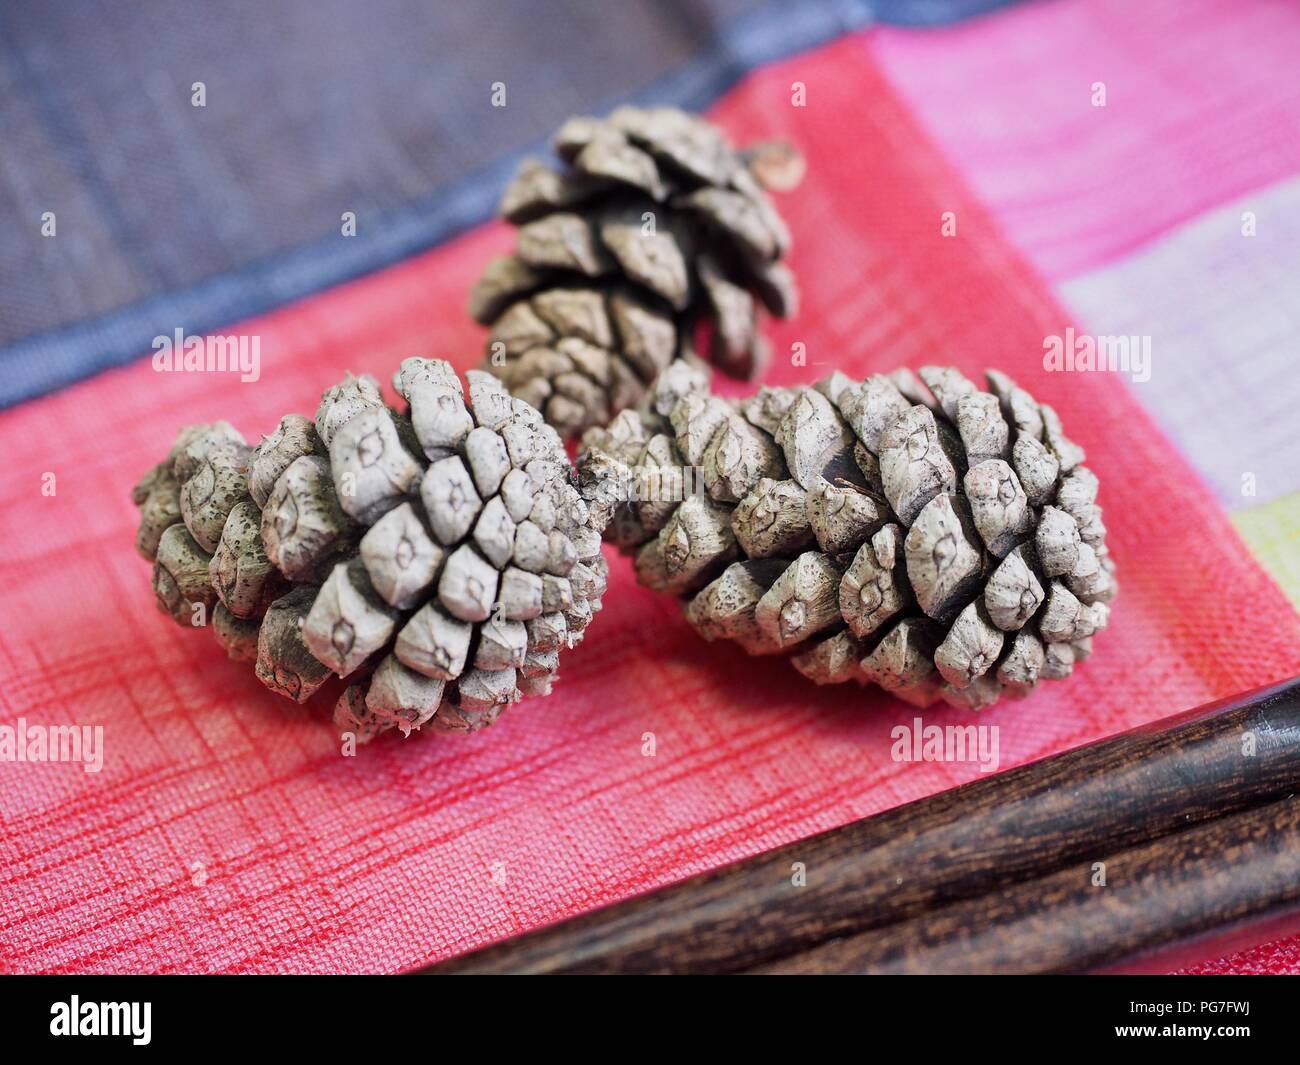 Korea's Small Pine Cones Stock Photo by ©hssbb79 210101936